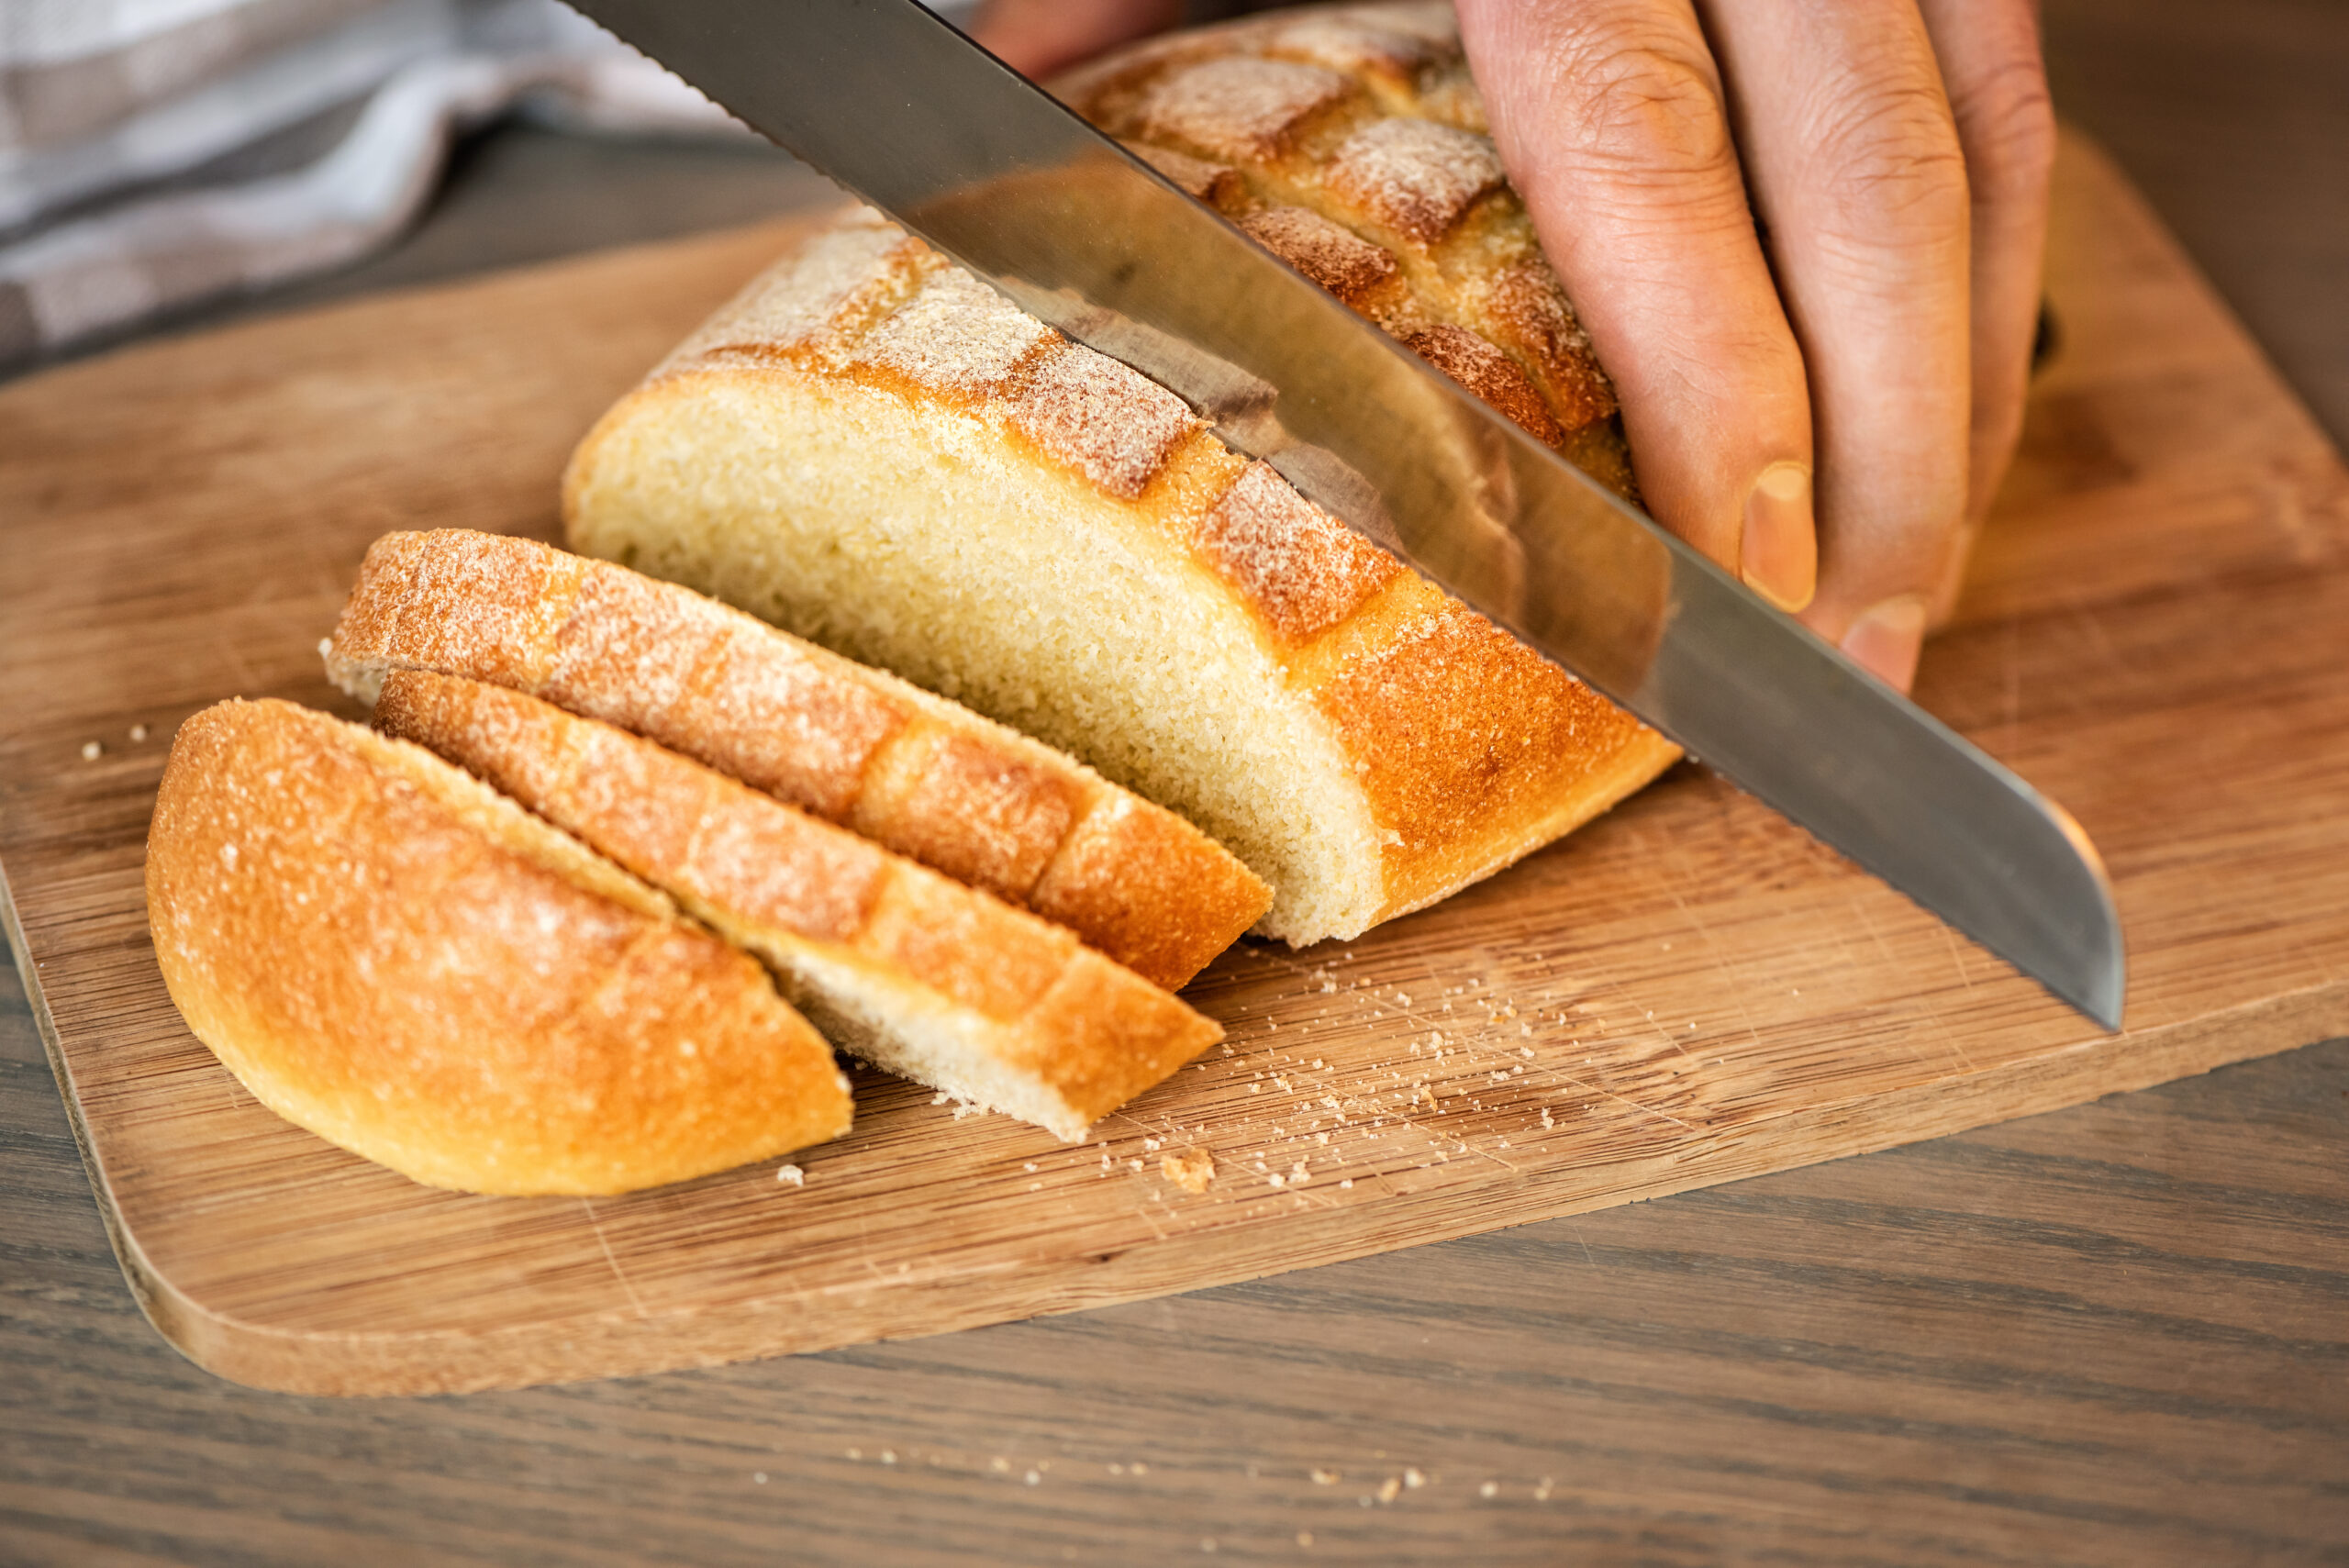 A man cuts bread with a serrated knife.